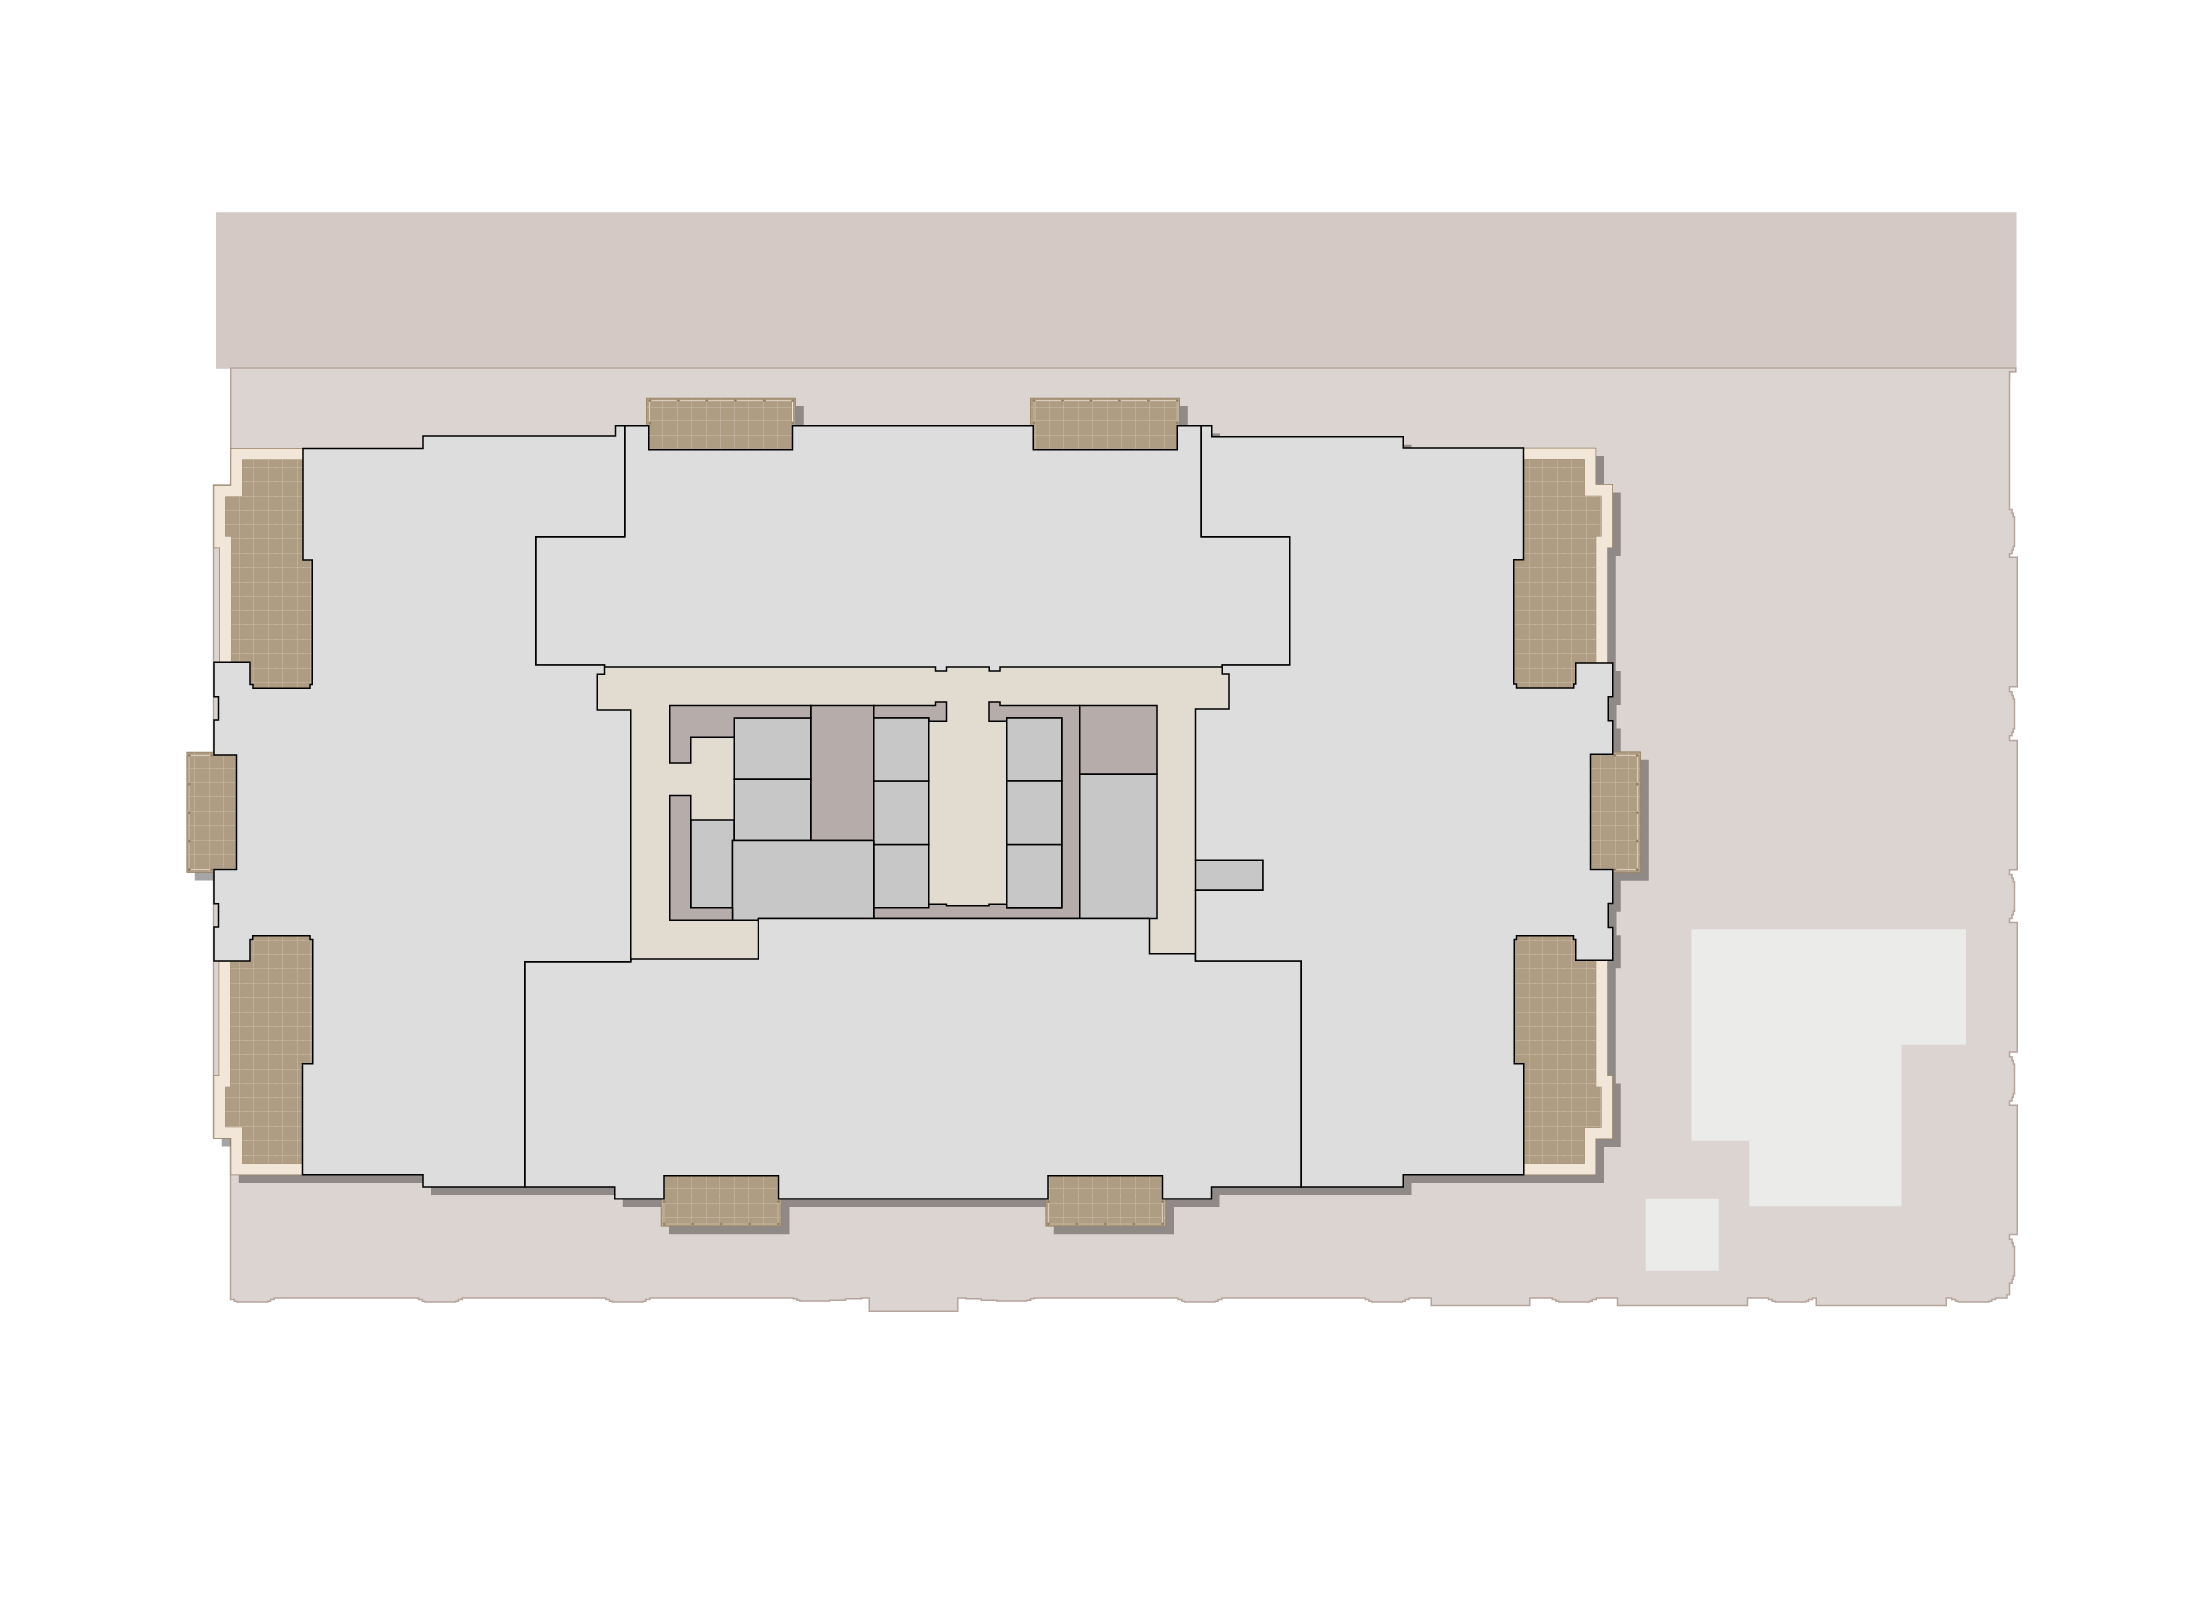 Site Plan penthouse level